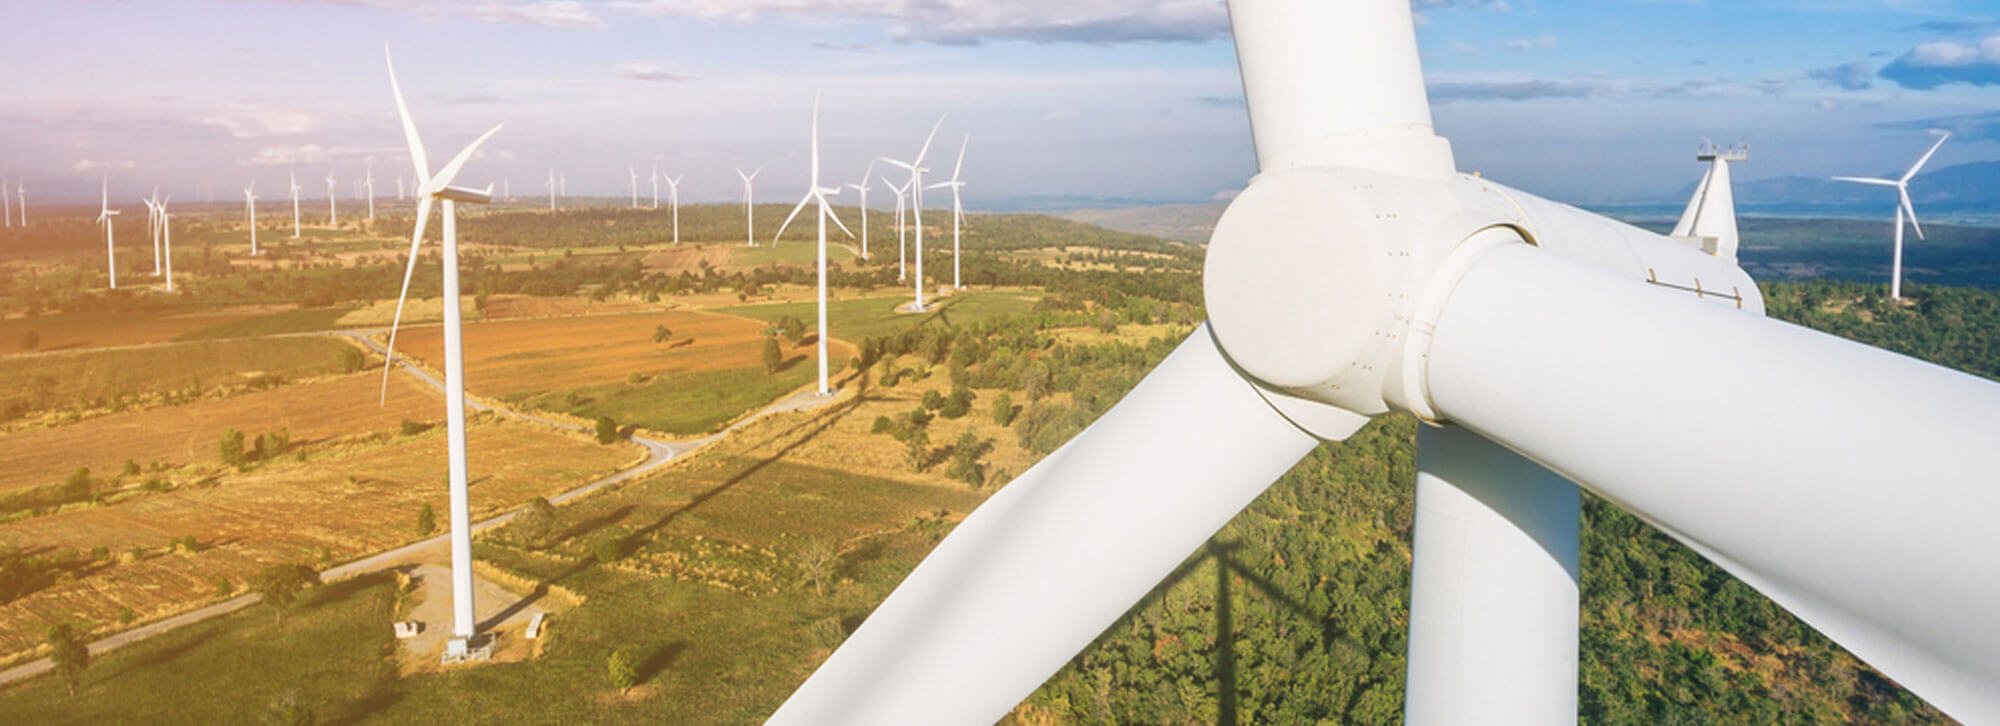 Aerial photo of a wind turbine farm